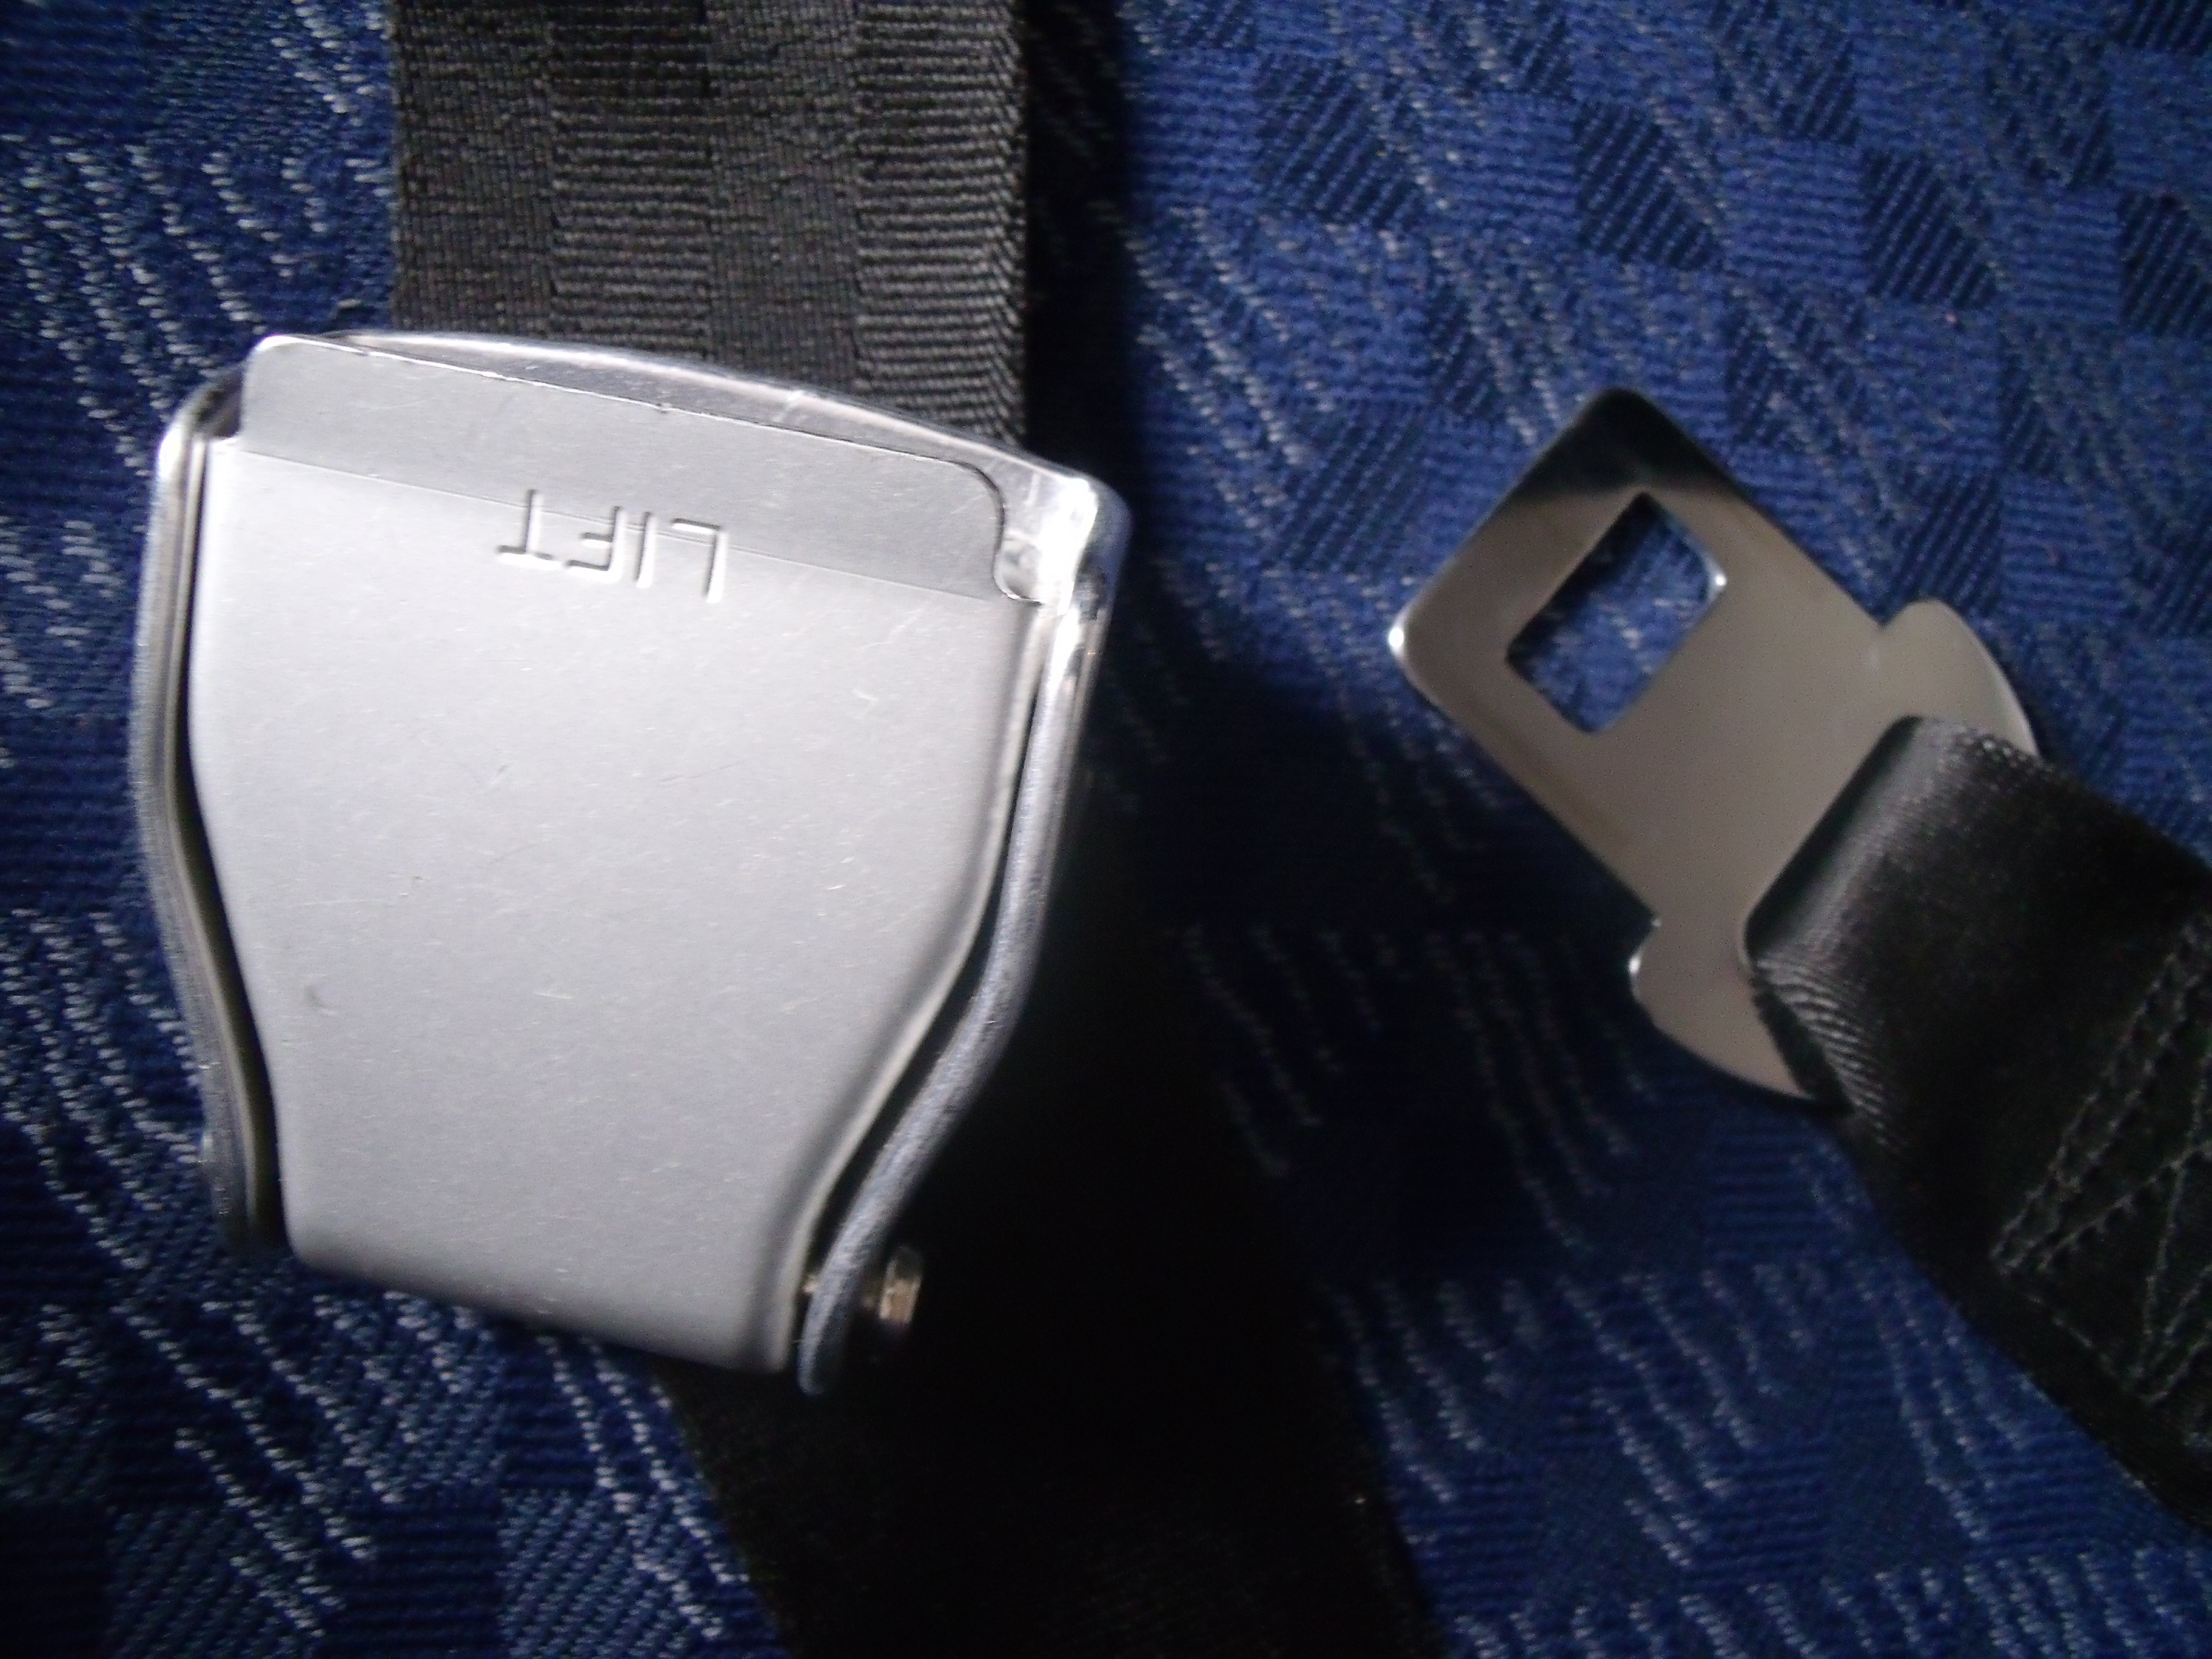 Airplane seat belt